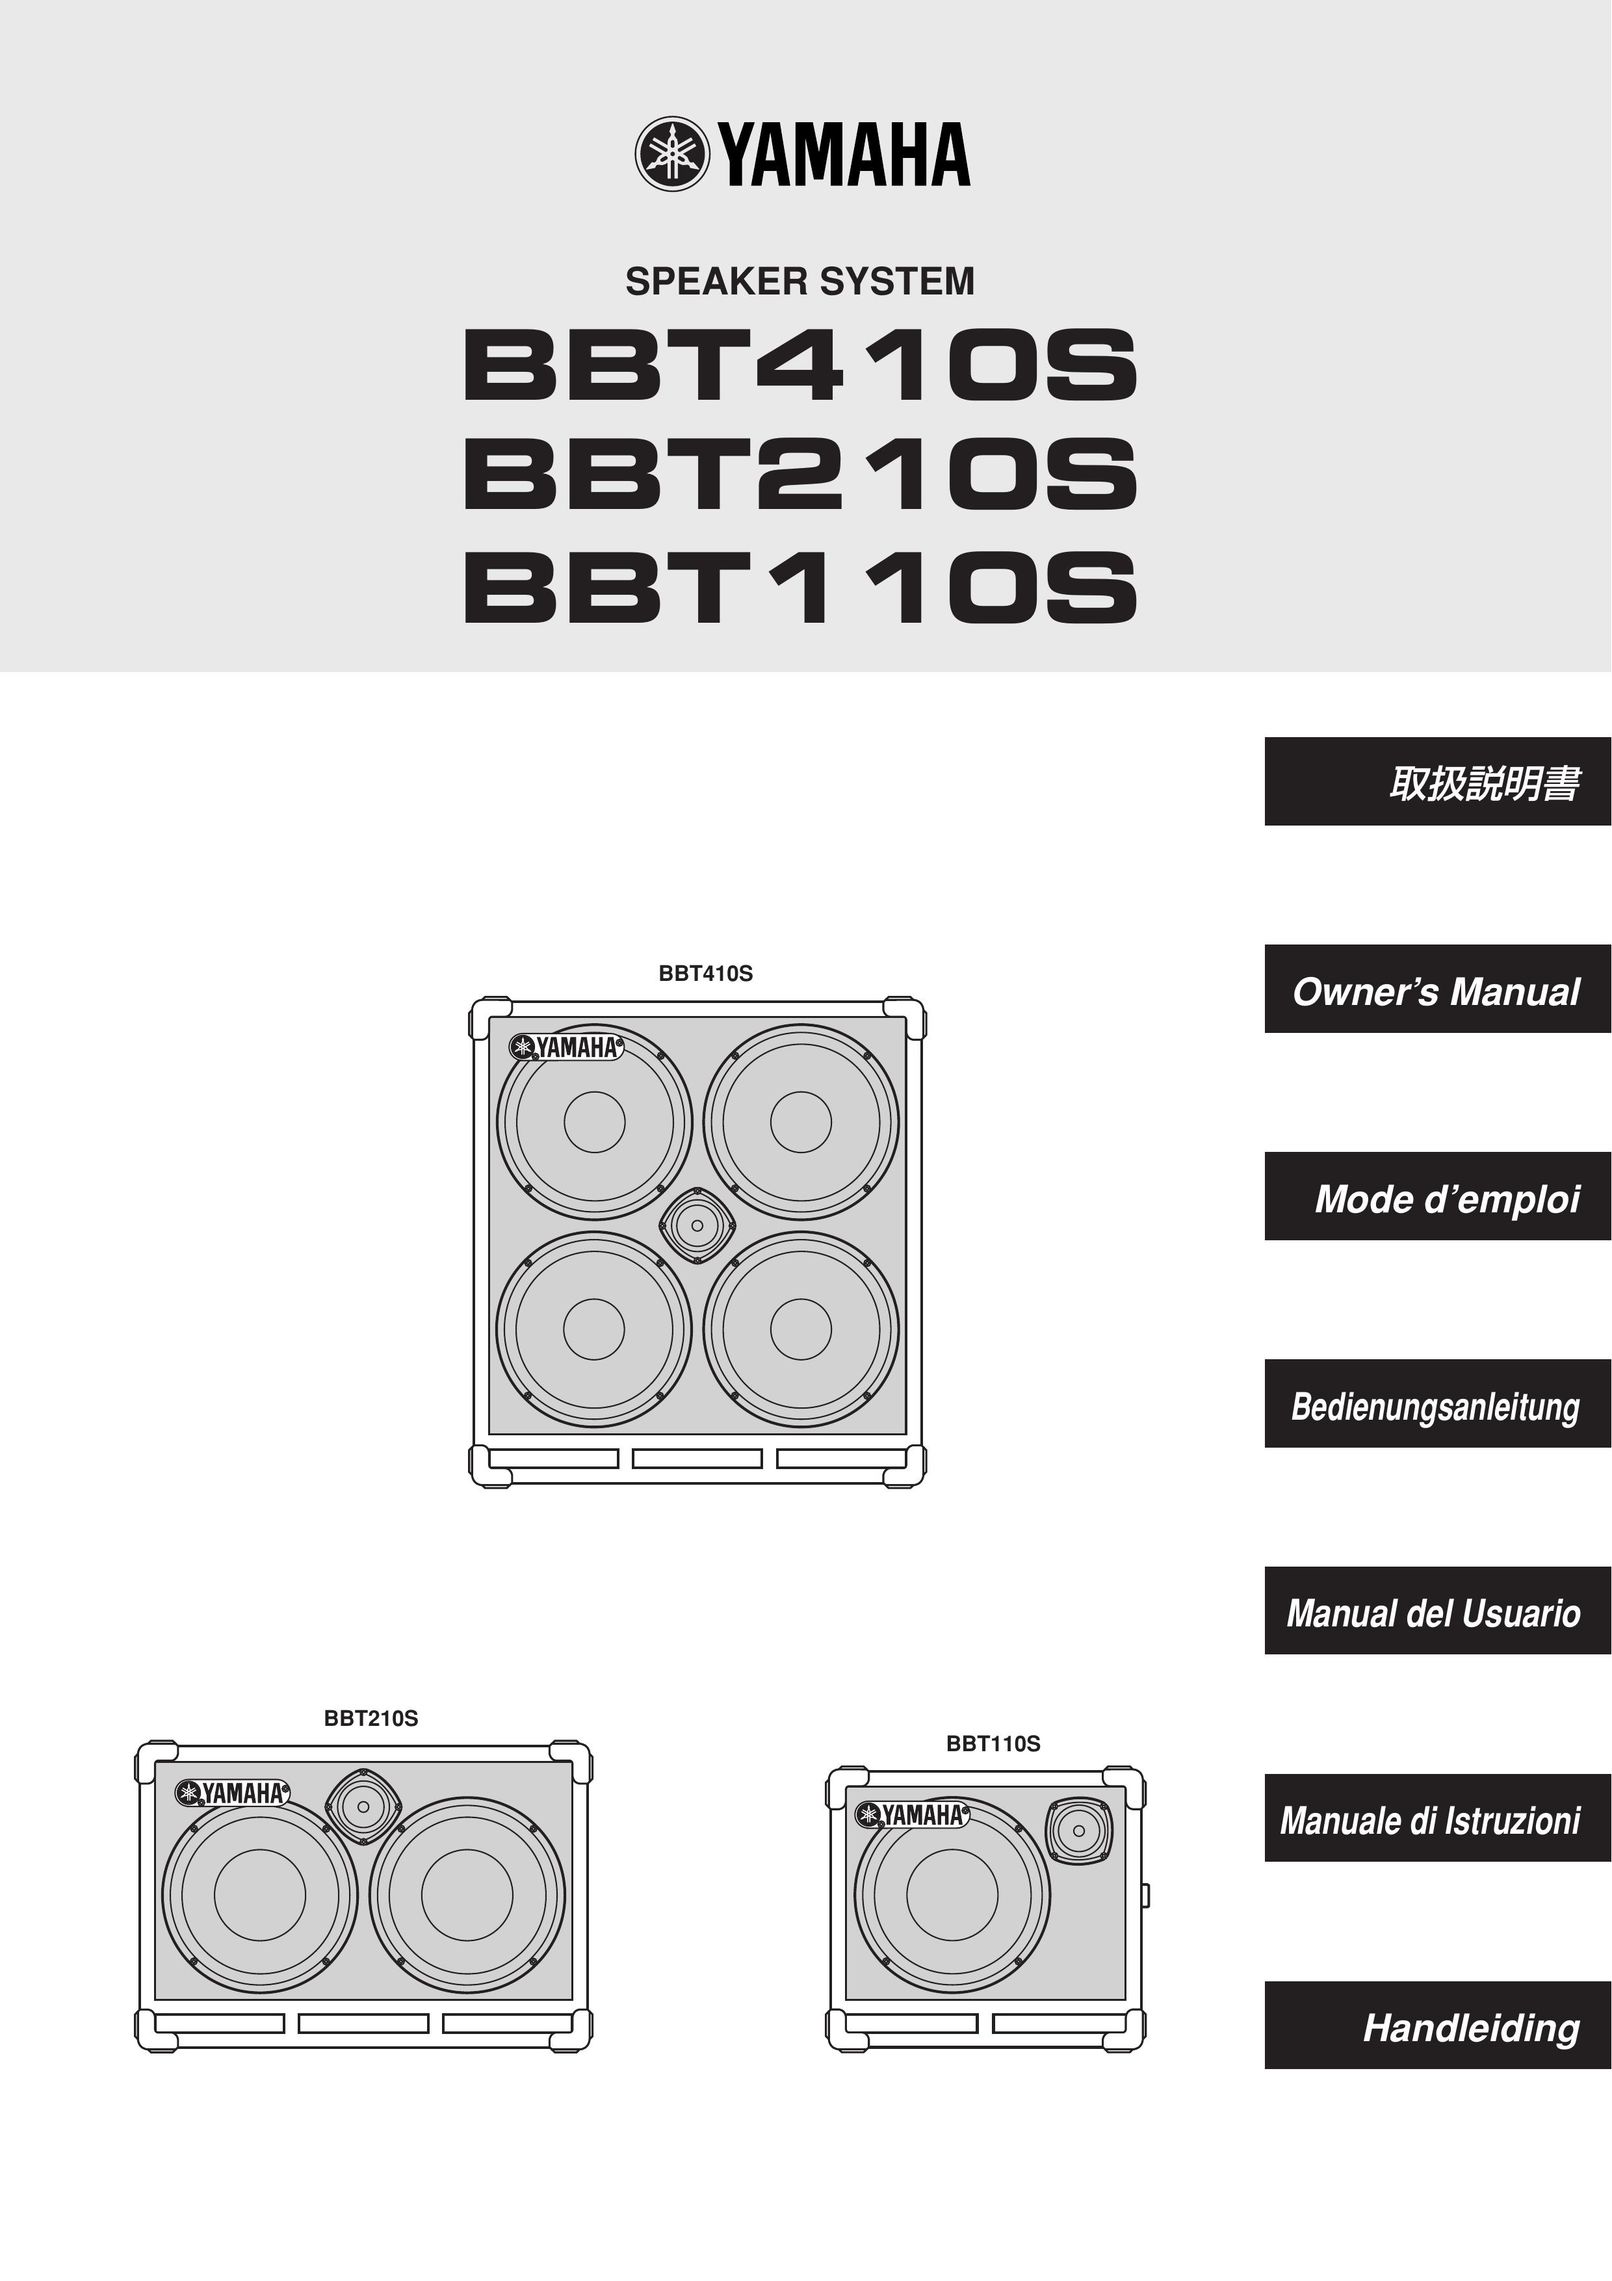 Yamaha BBT210S Speaker System User Manual